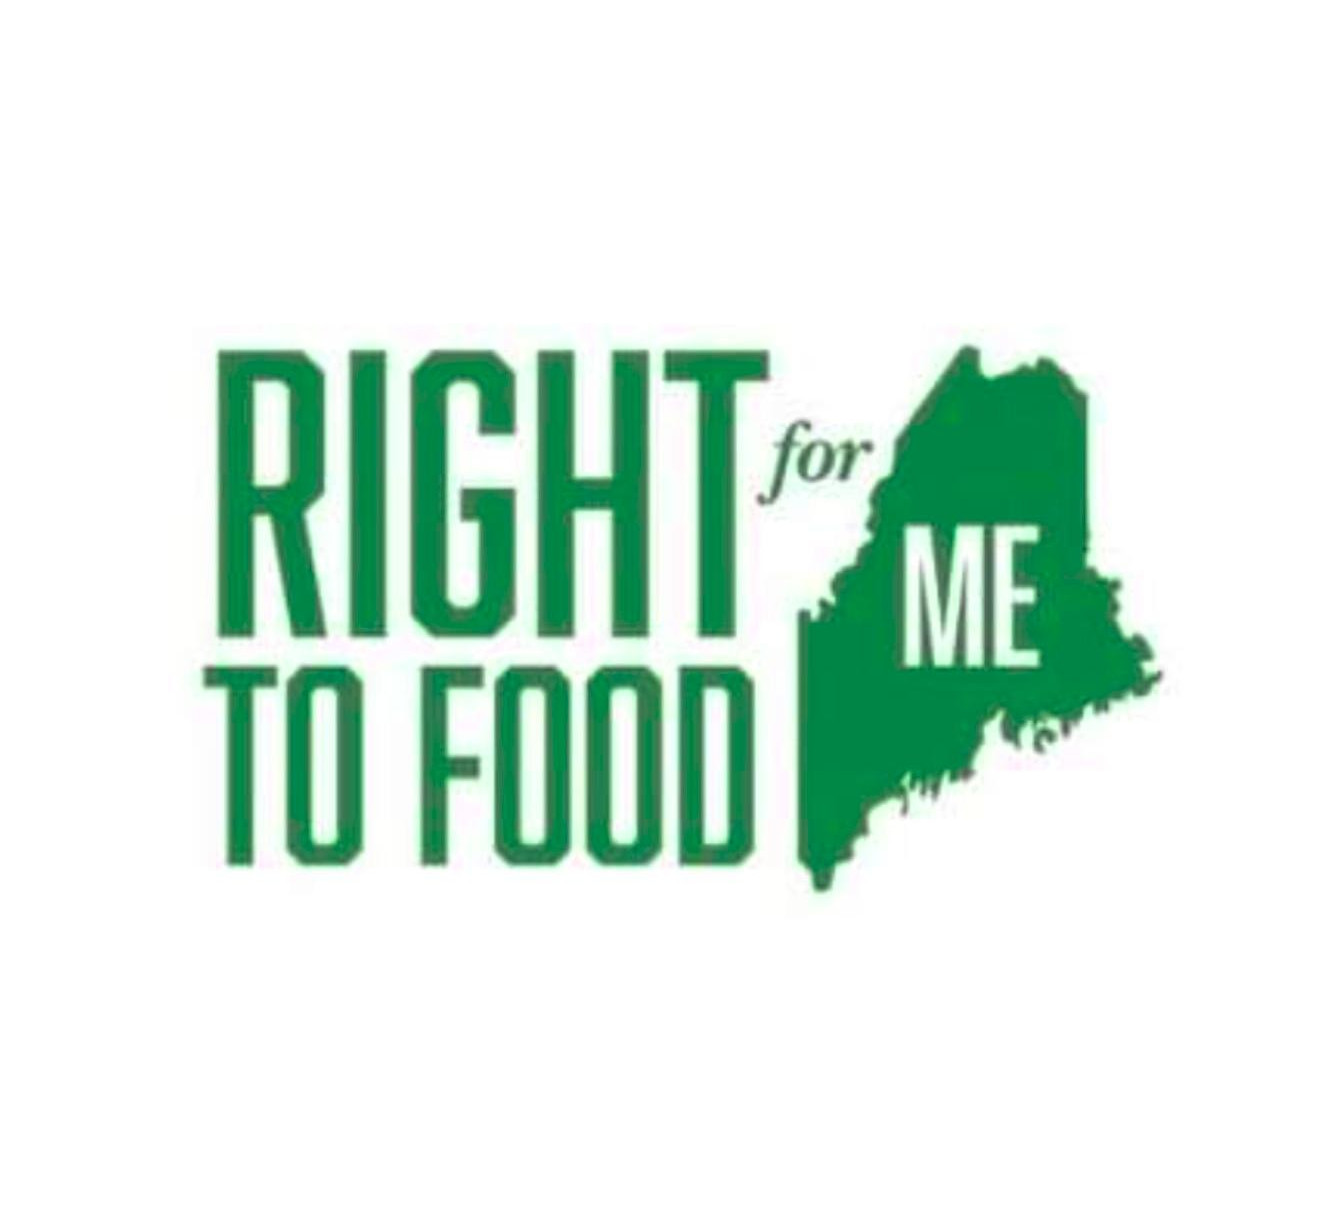 Maine voters pass &#8216;Right to Food' amendment through referendum